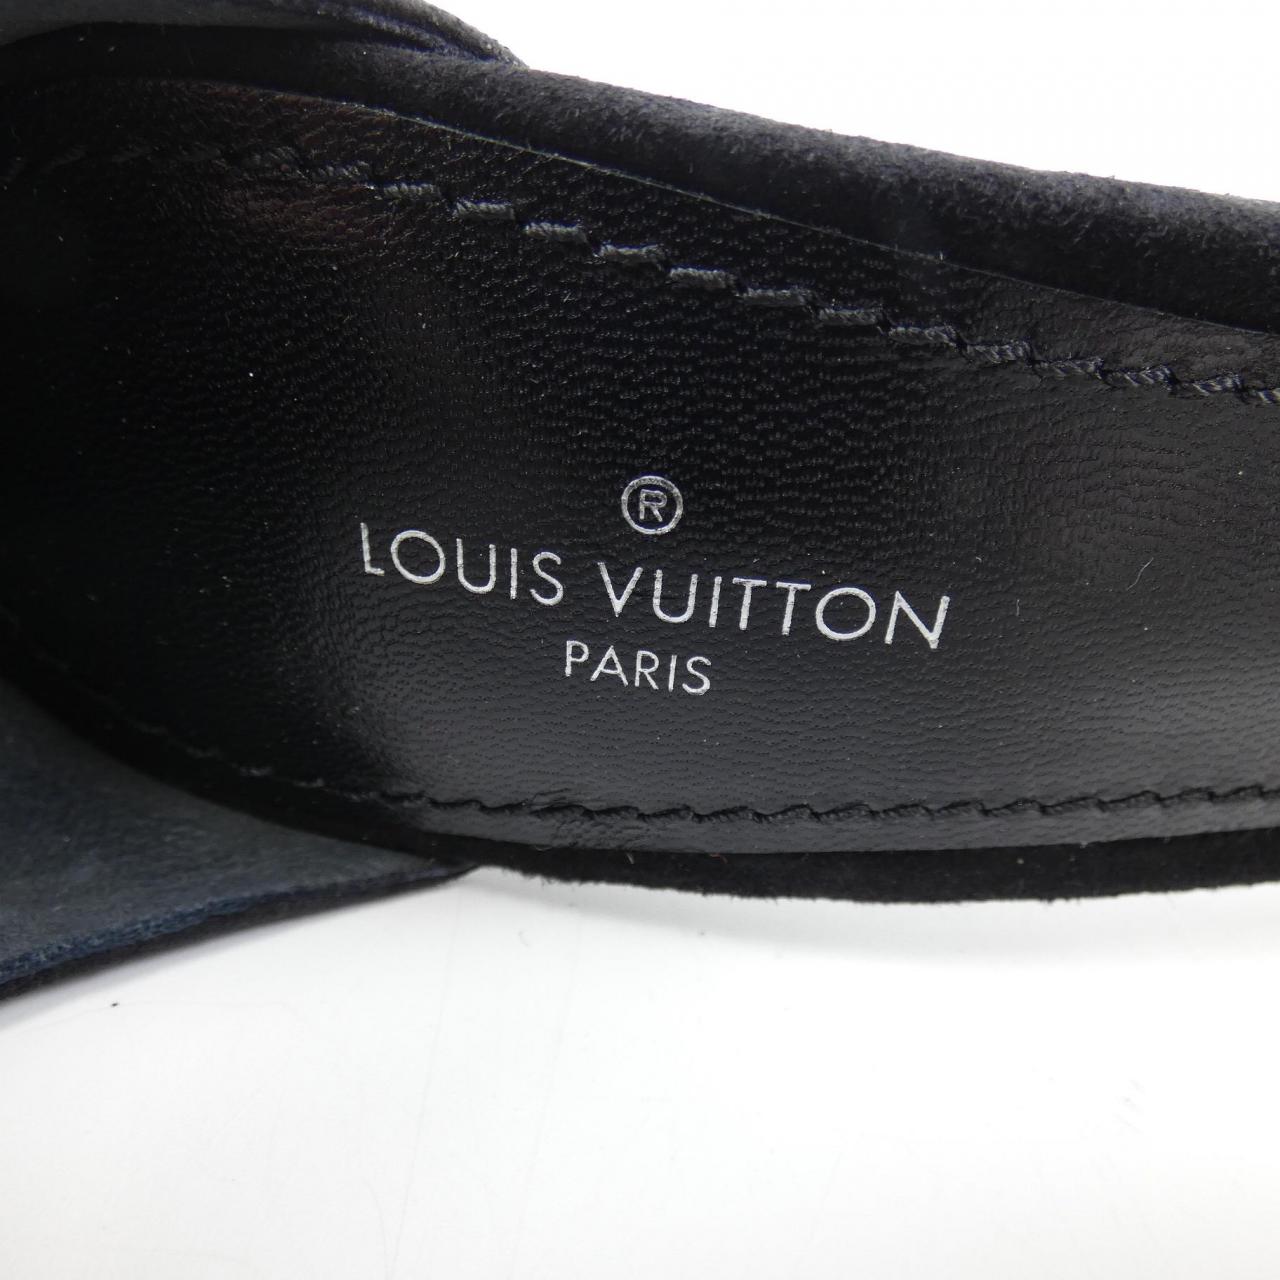 LOUIS VUITTON涼鞋